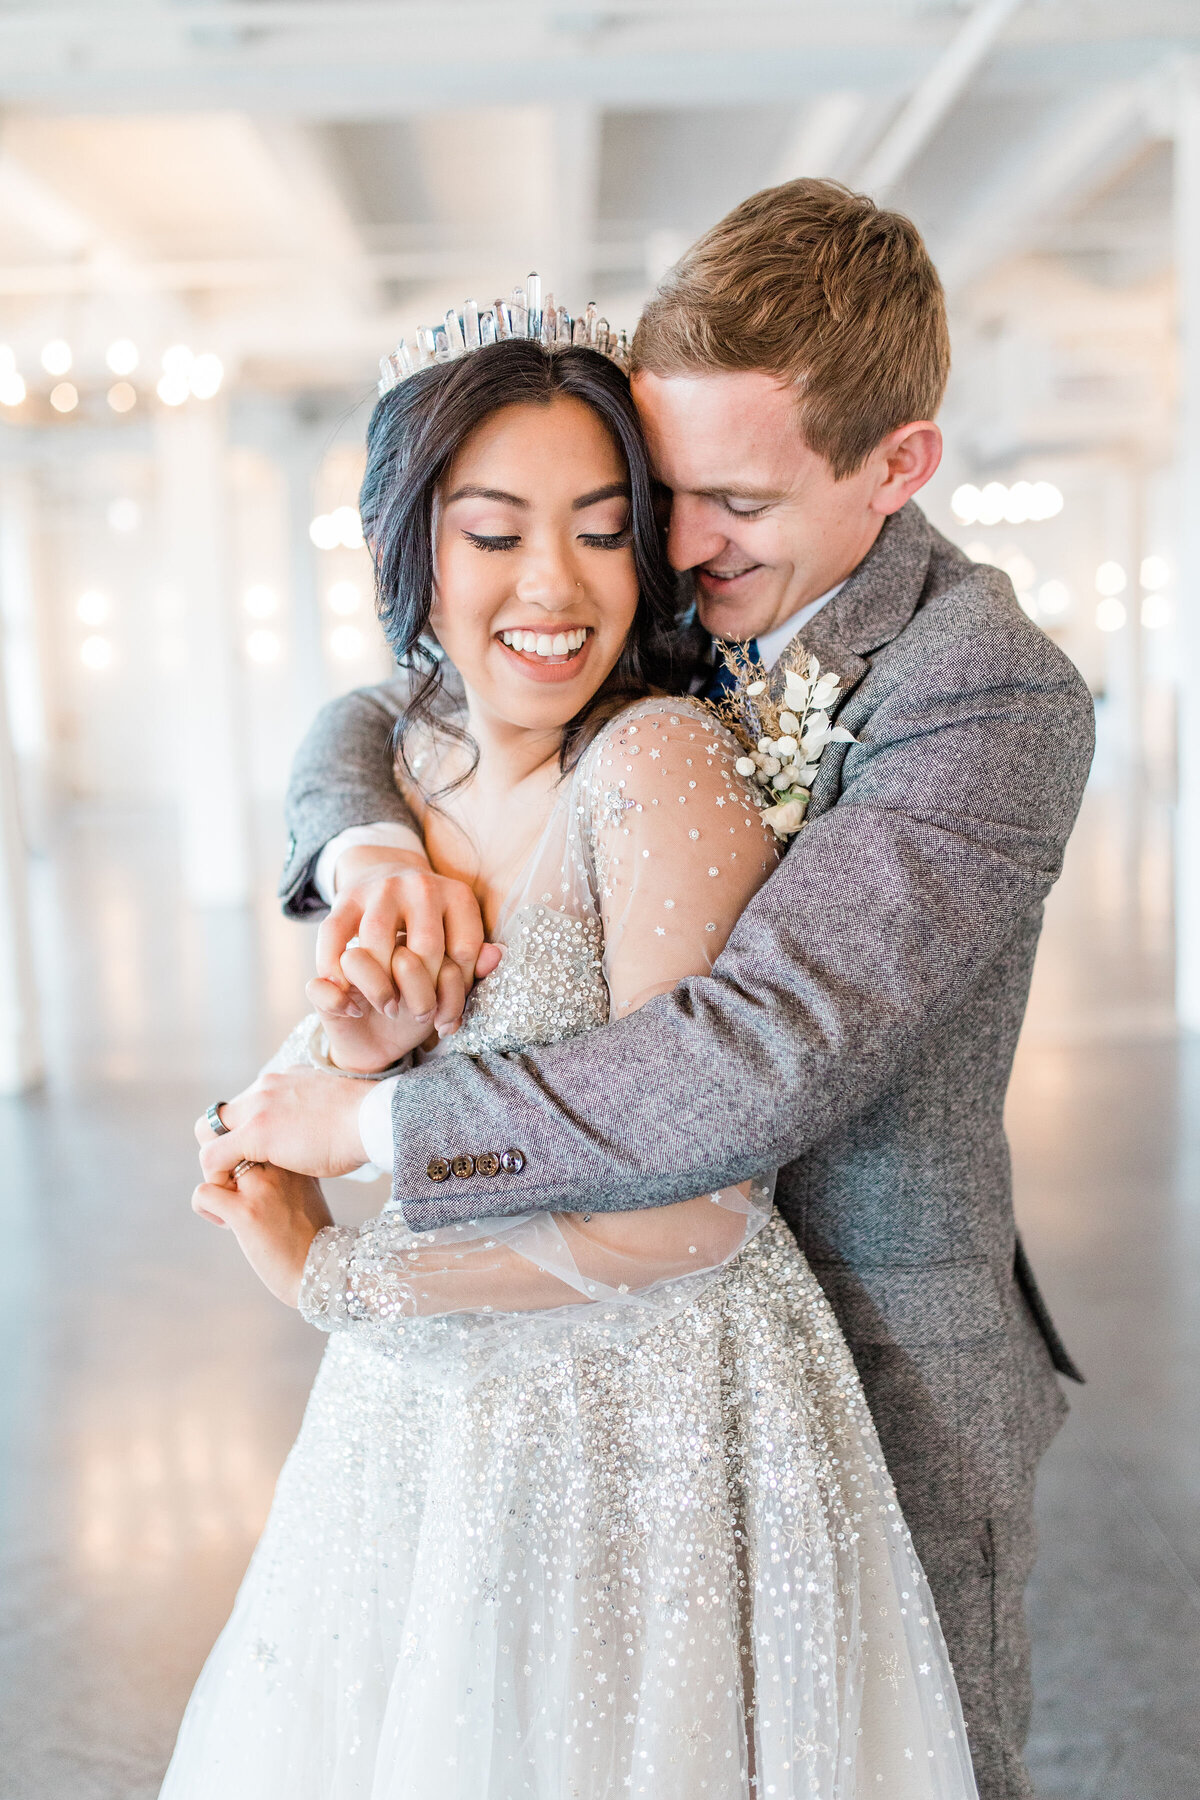 Couple-Wedding-Photography-Bride-Dress-Crown